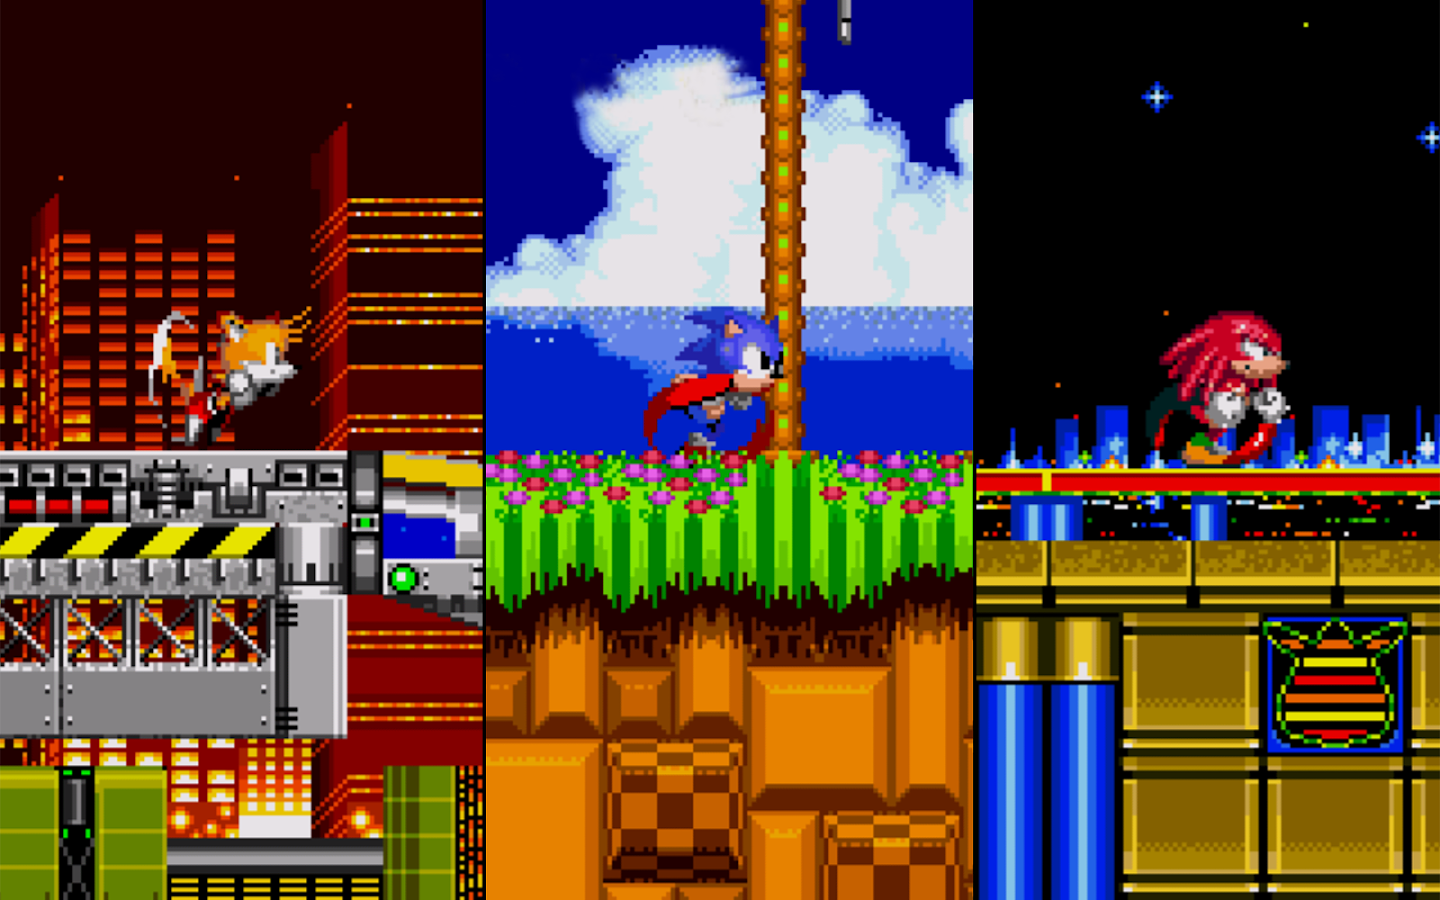  لعبه Sonic The Hedgehog 2 v.3.1.5 مدفوعه كامله 8X0XHJvlGyOdnEc_1Wox3rJK3DLDEuVQU7B5FNBaDep1TCbhyJb1qRgteHJetNI1k2nU=h900-rw